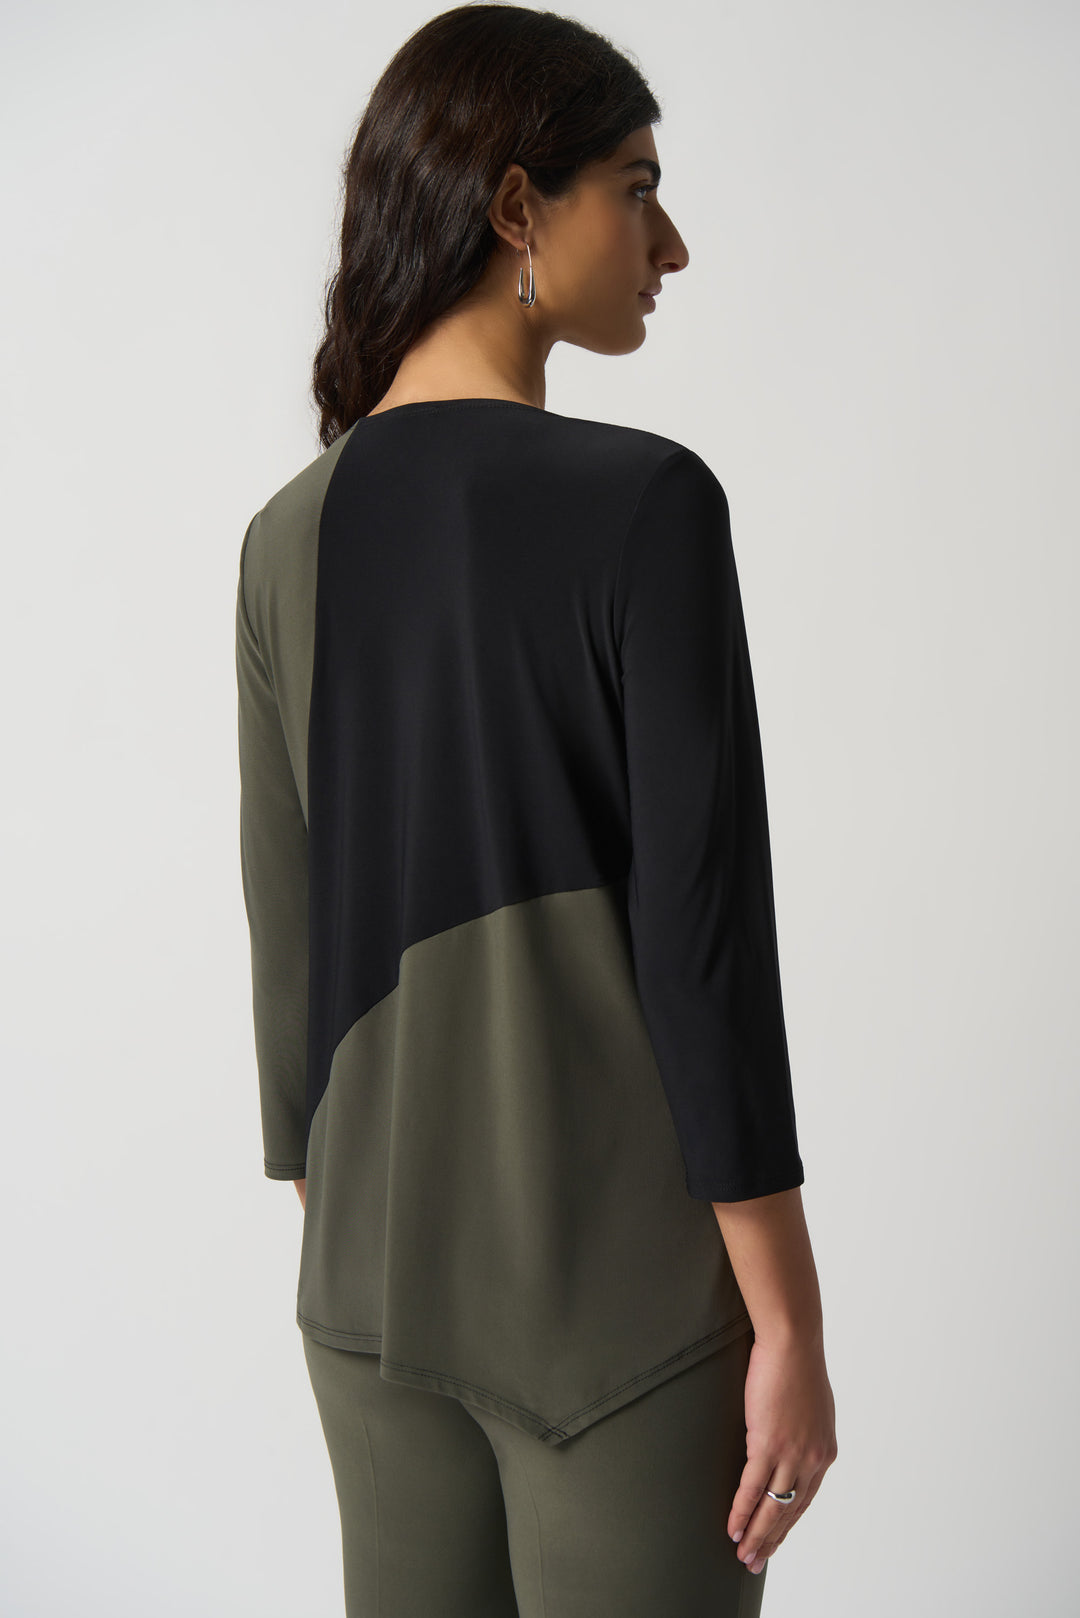 Joseph Ribkoff Fall 2023 women's casual jersey fabric asymmetrical tunic top - back